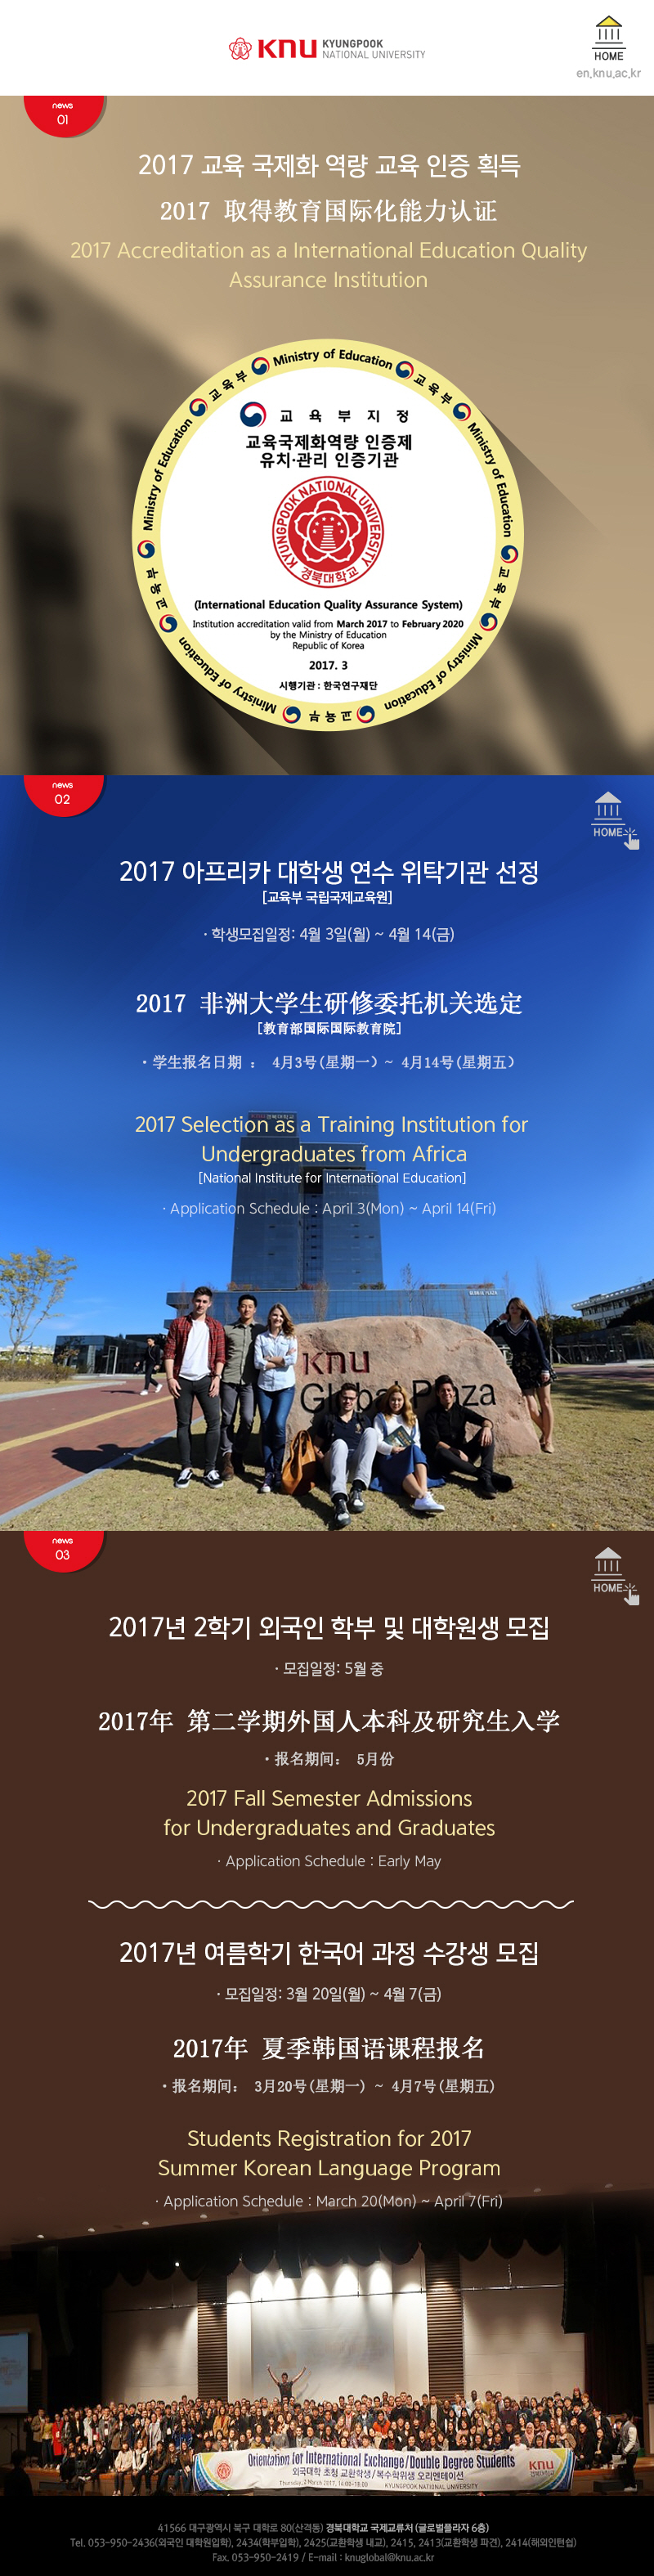 2017 KNU International Program Newsletter NO.1 관련 이미지입니다